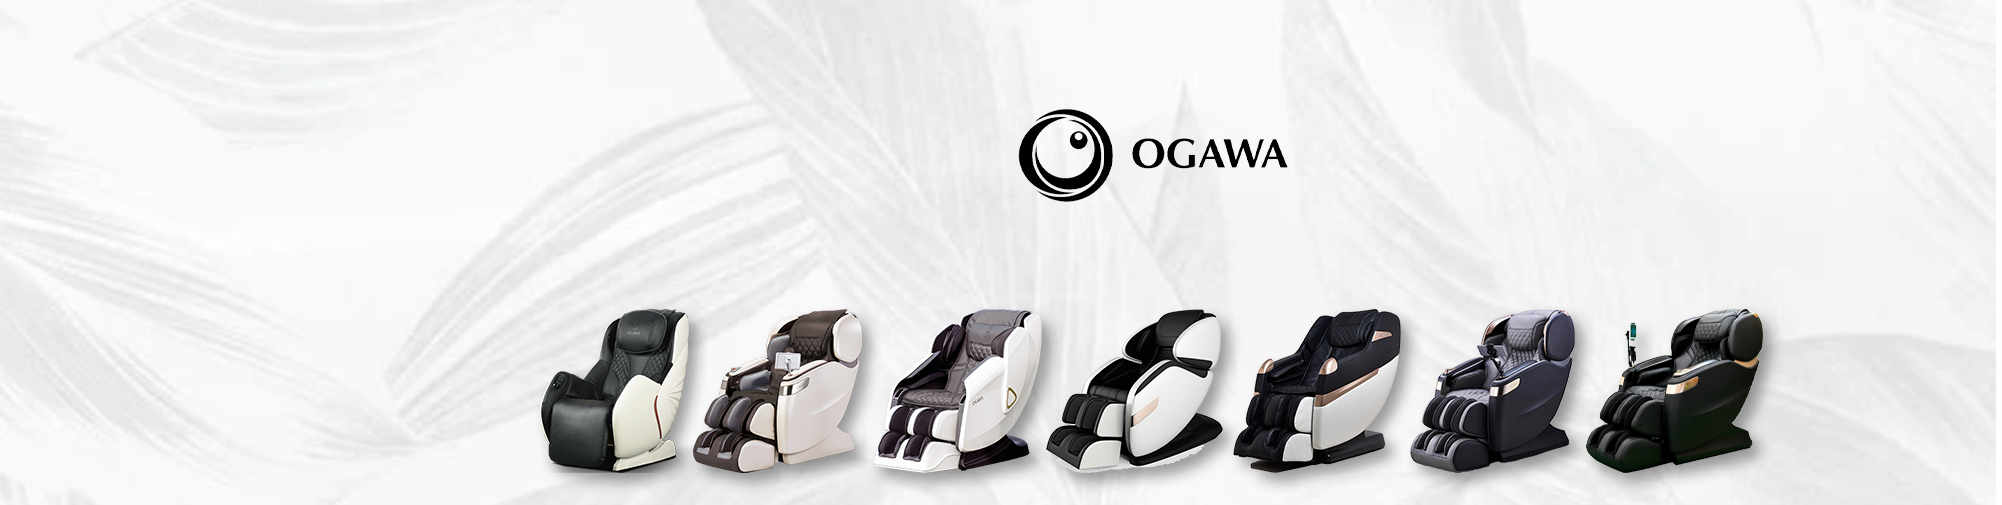 OGAWA | Massagestoel Wereld